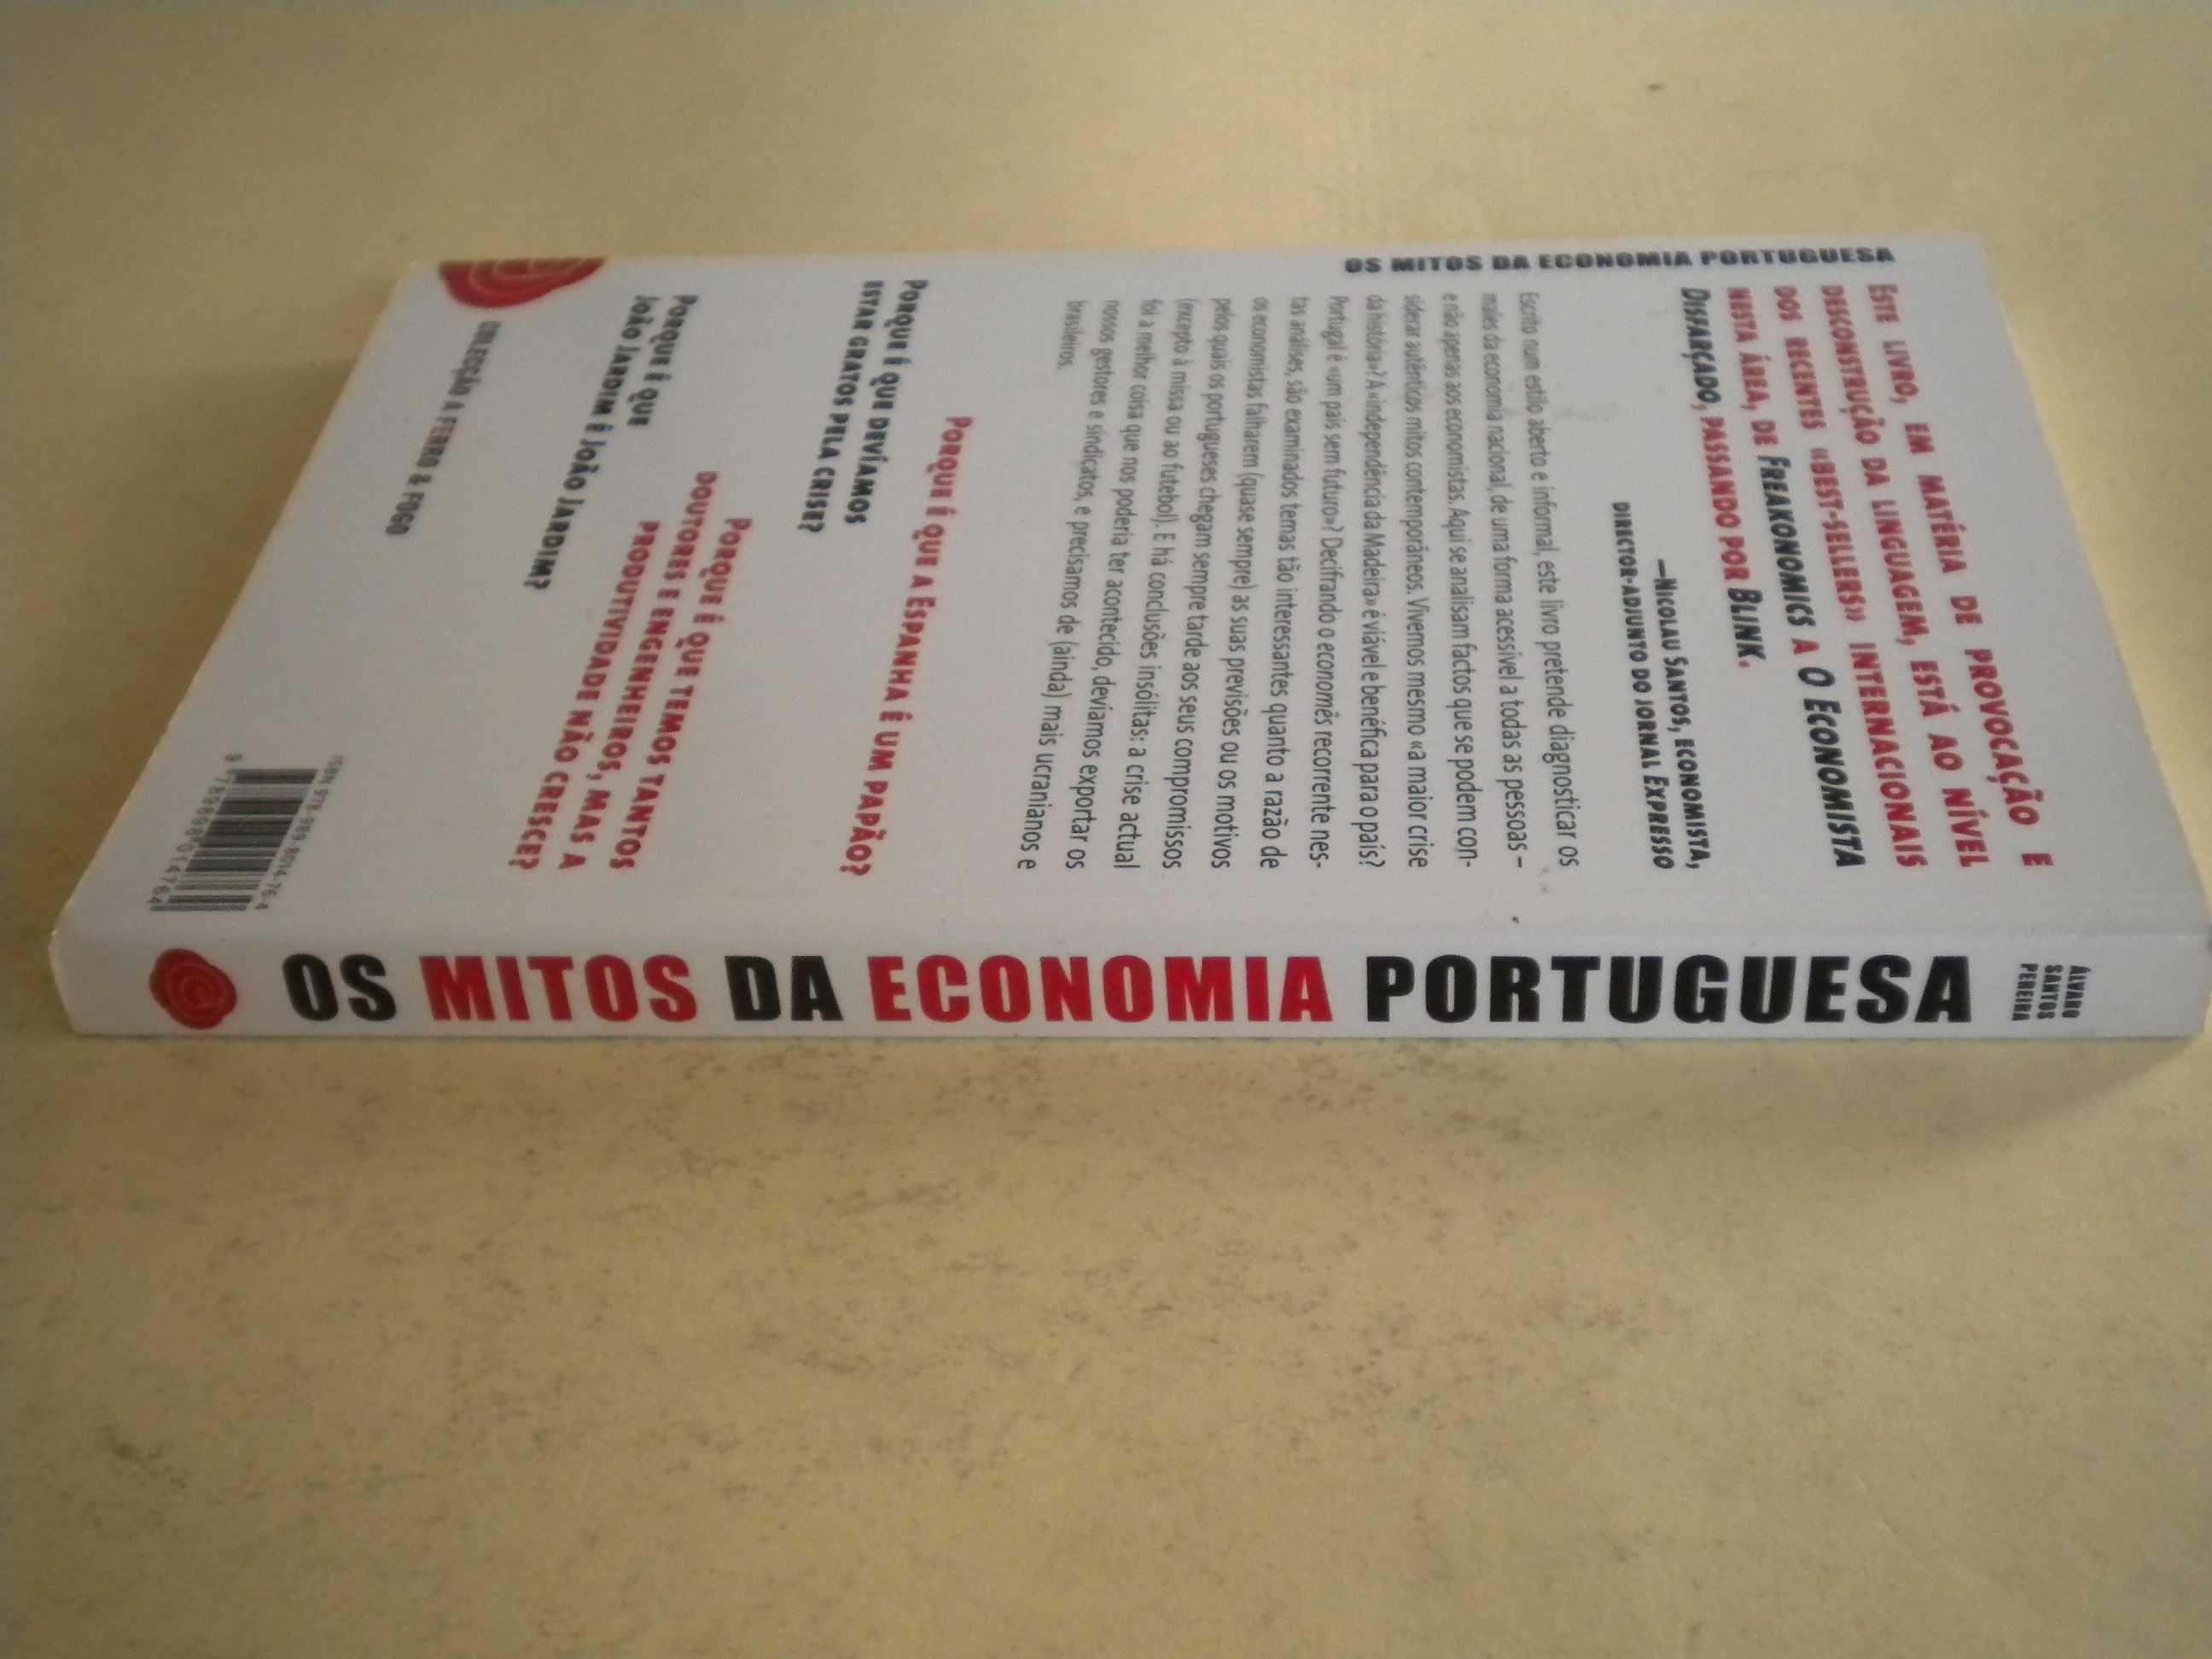 Os Mitos da Economia Portuguesa
de Álvaro Santos Pereira